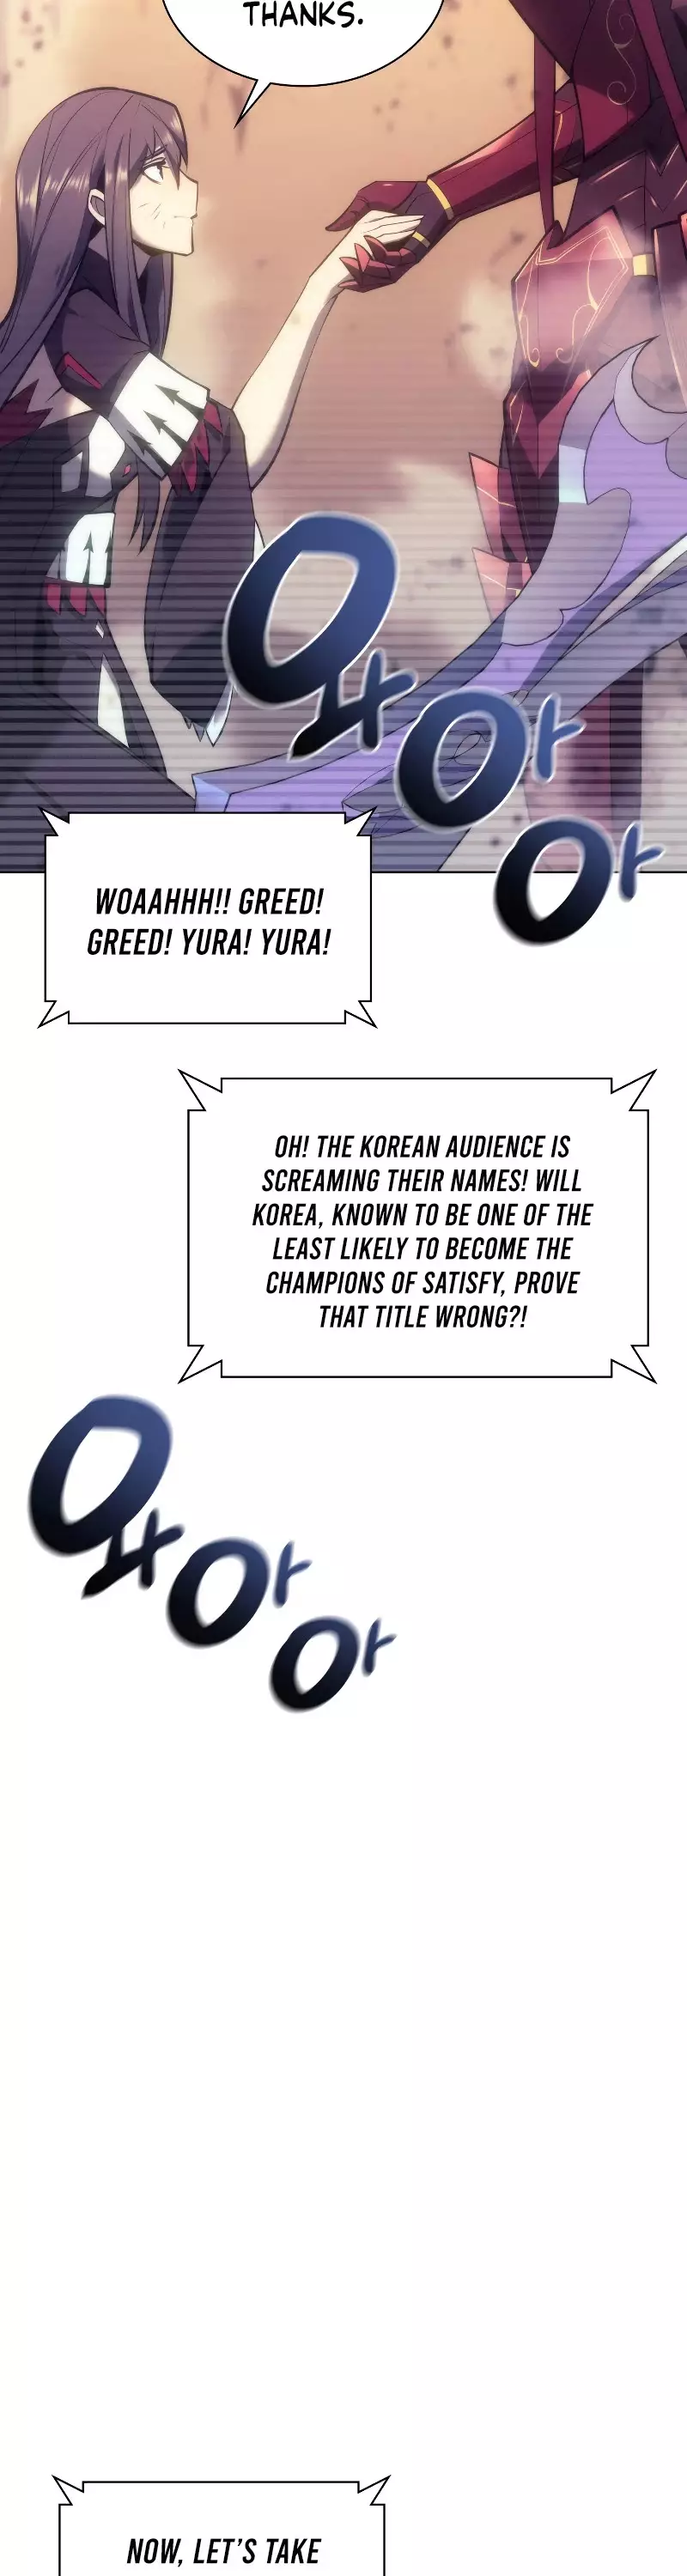 Read Overgeared (Team Argo) 94 - Oni Scan